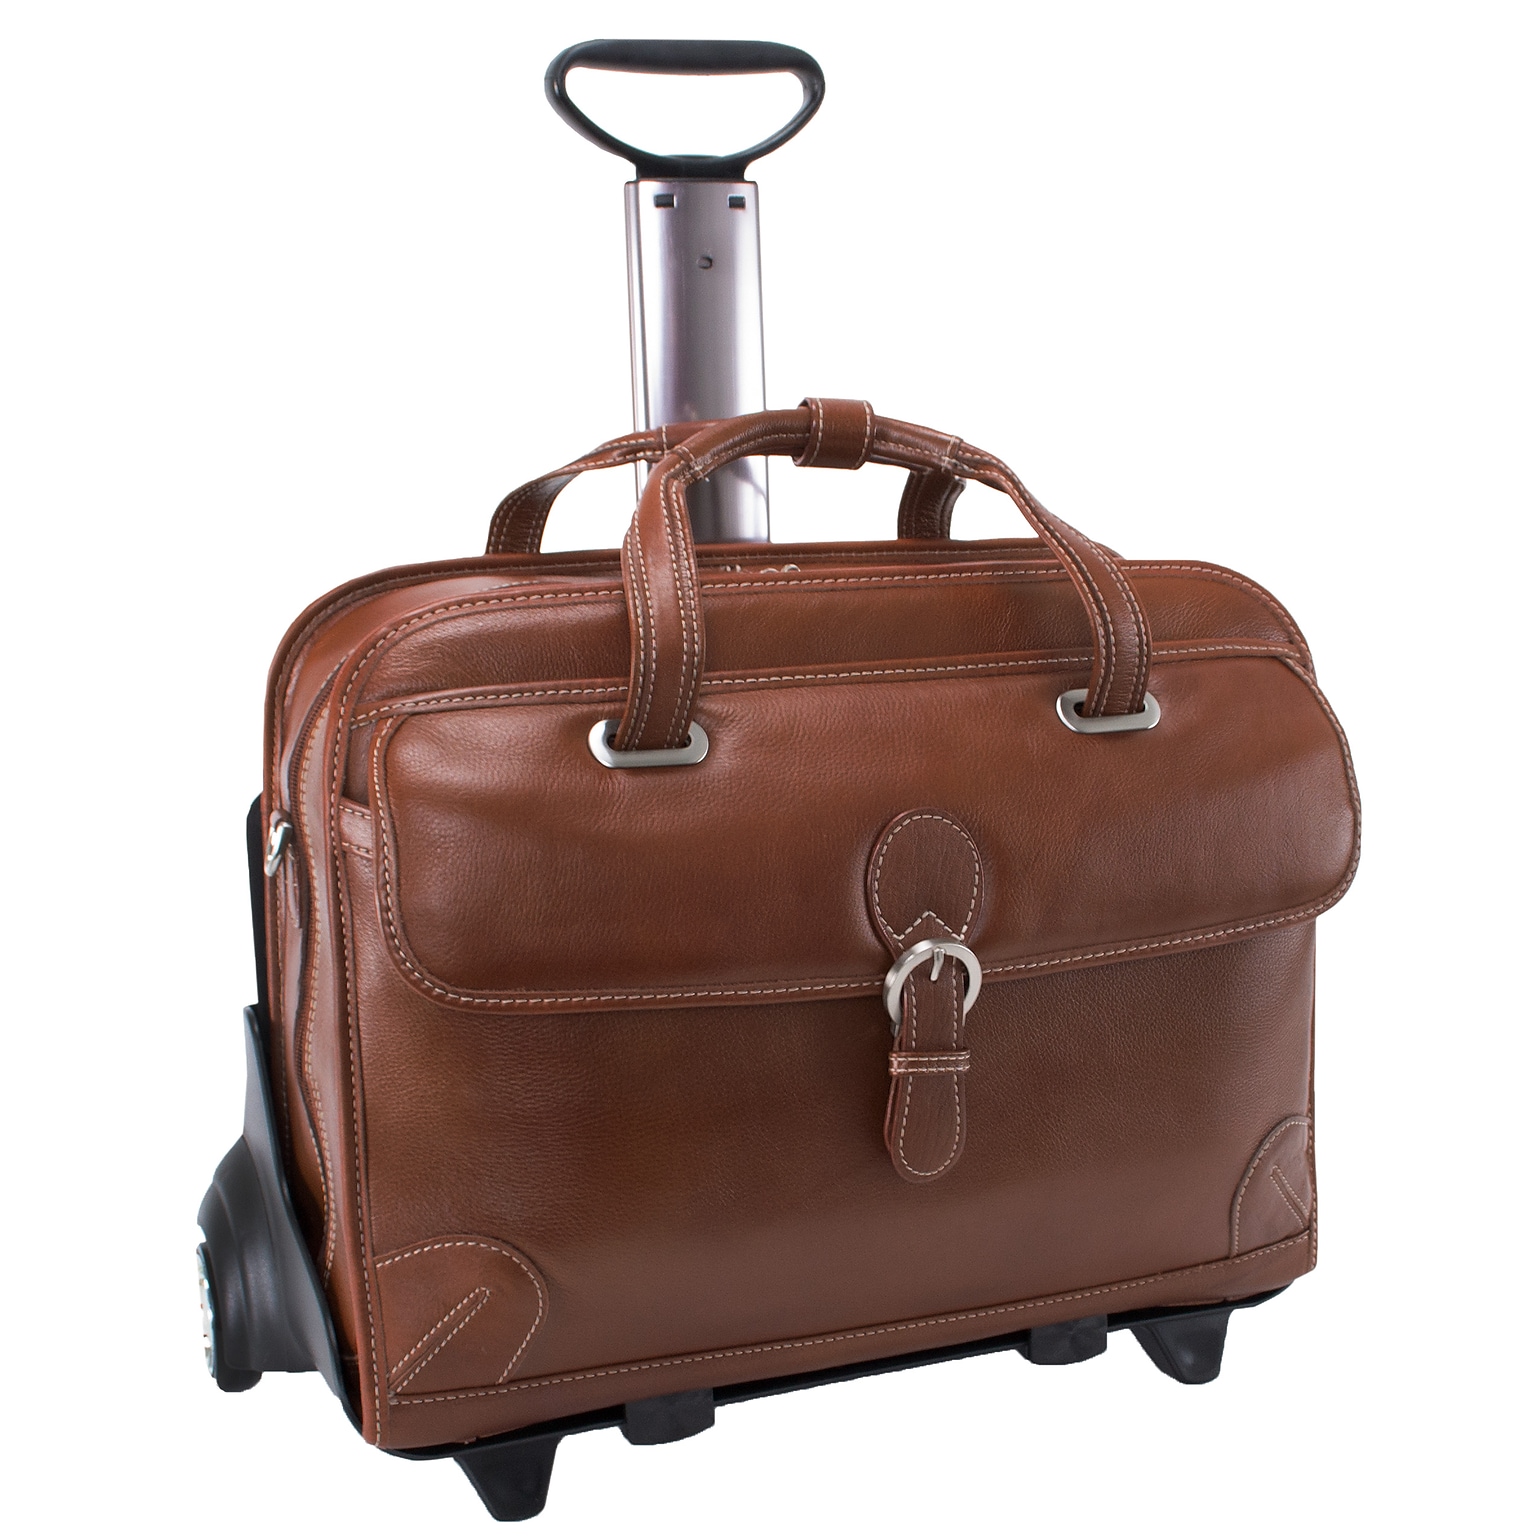 Siamod VERNAZZA, CARUGETTO, Napa Cashmere Leather, Patented Detachable -Wheeled Laptop Briefcase, Cognac (45294)